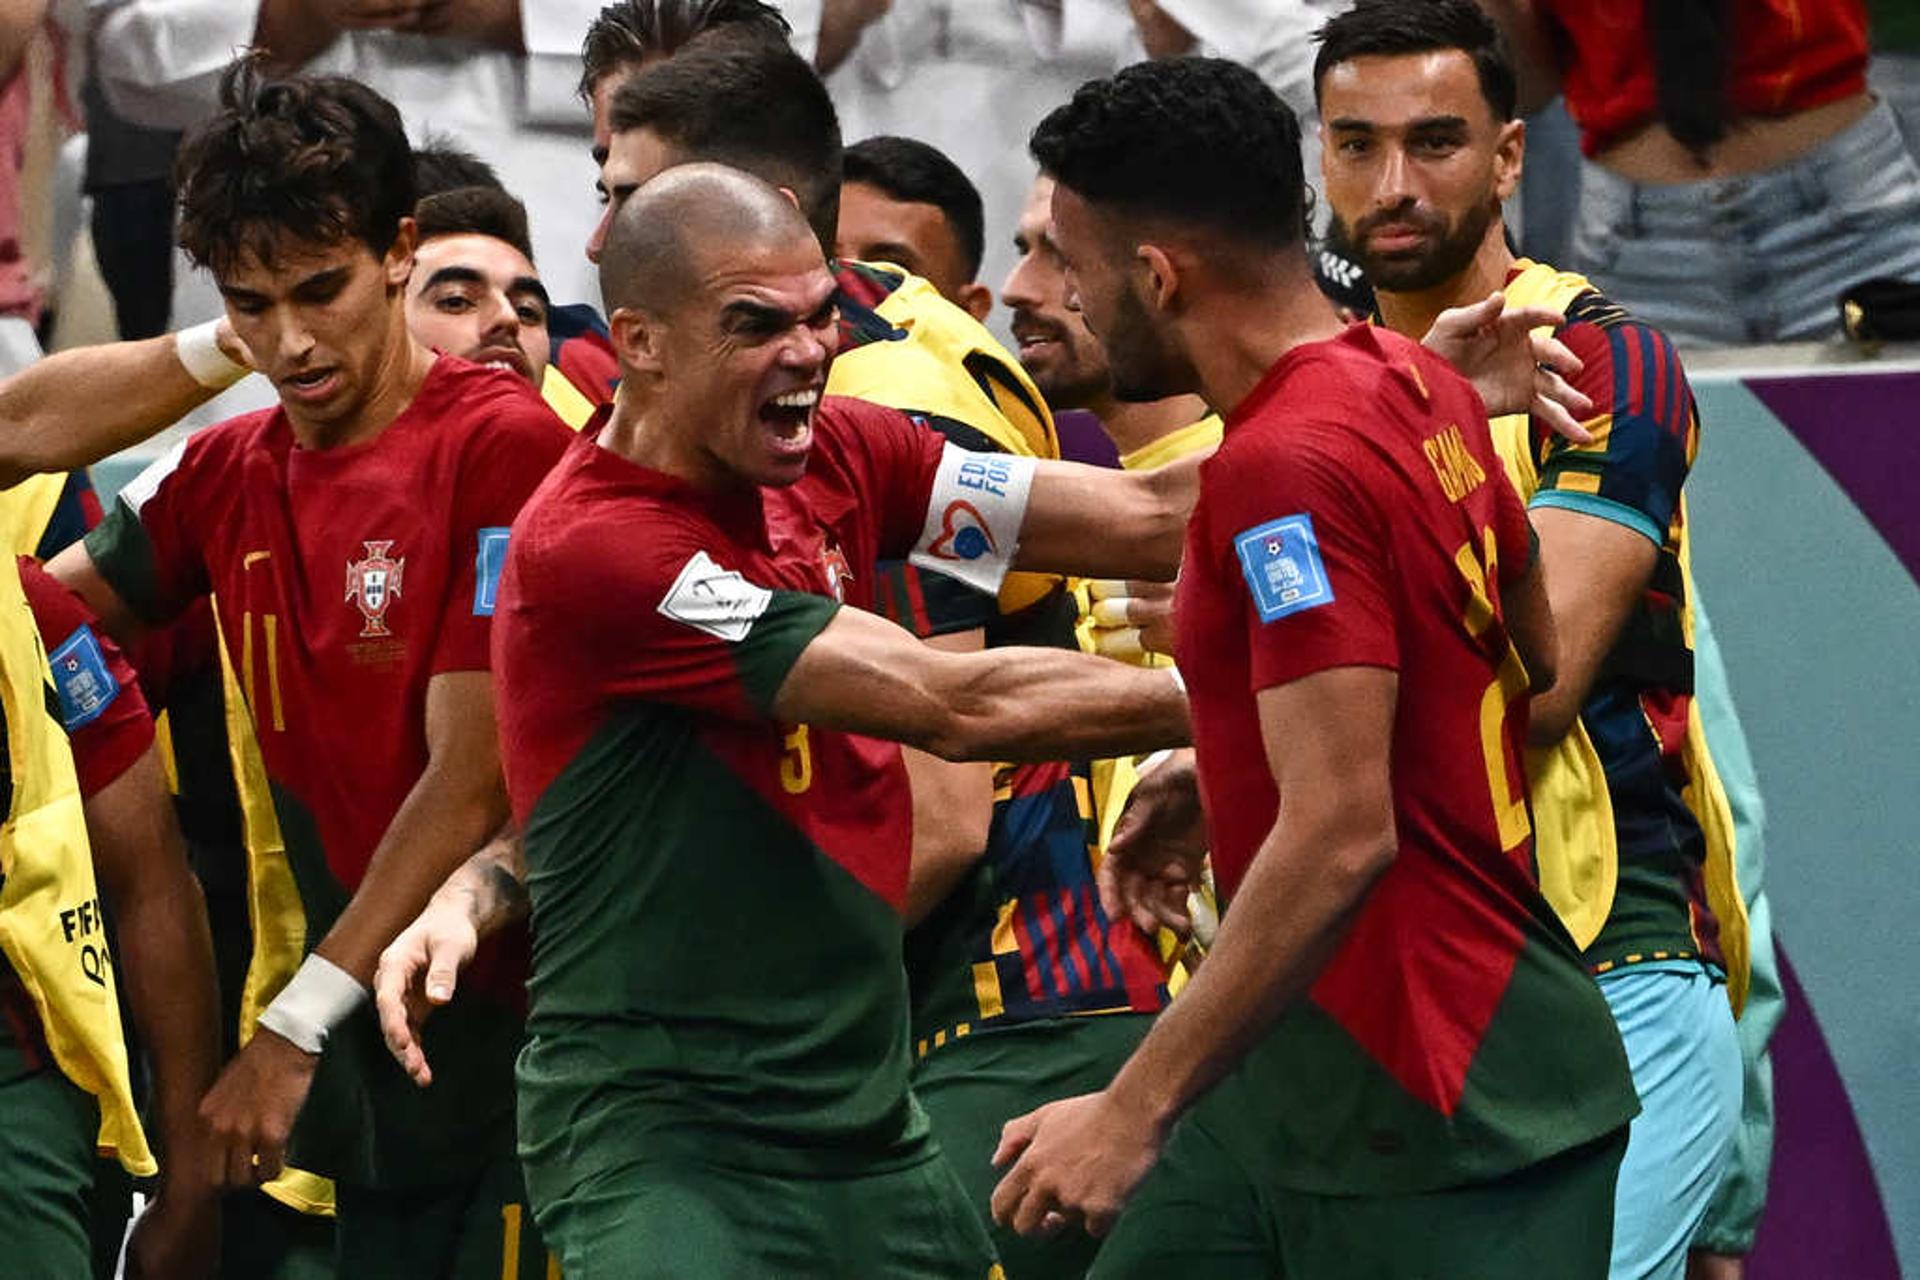 Portugal x Suíça - Gonçalo Ramos Pepe Portugal  -